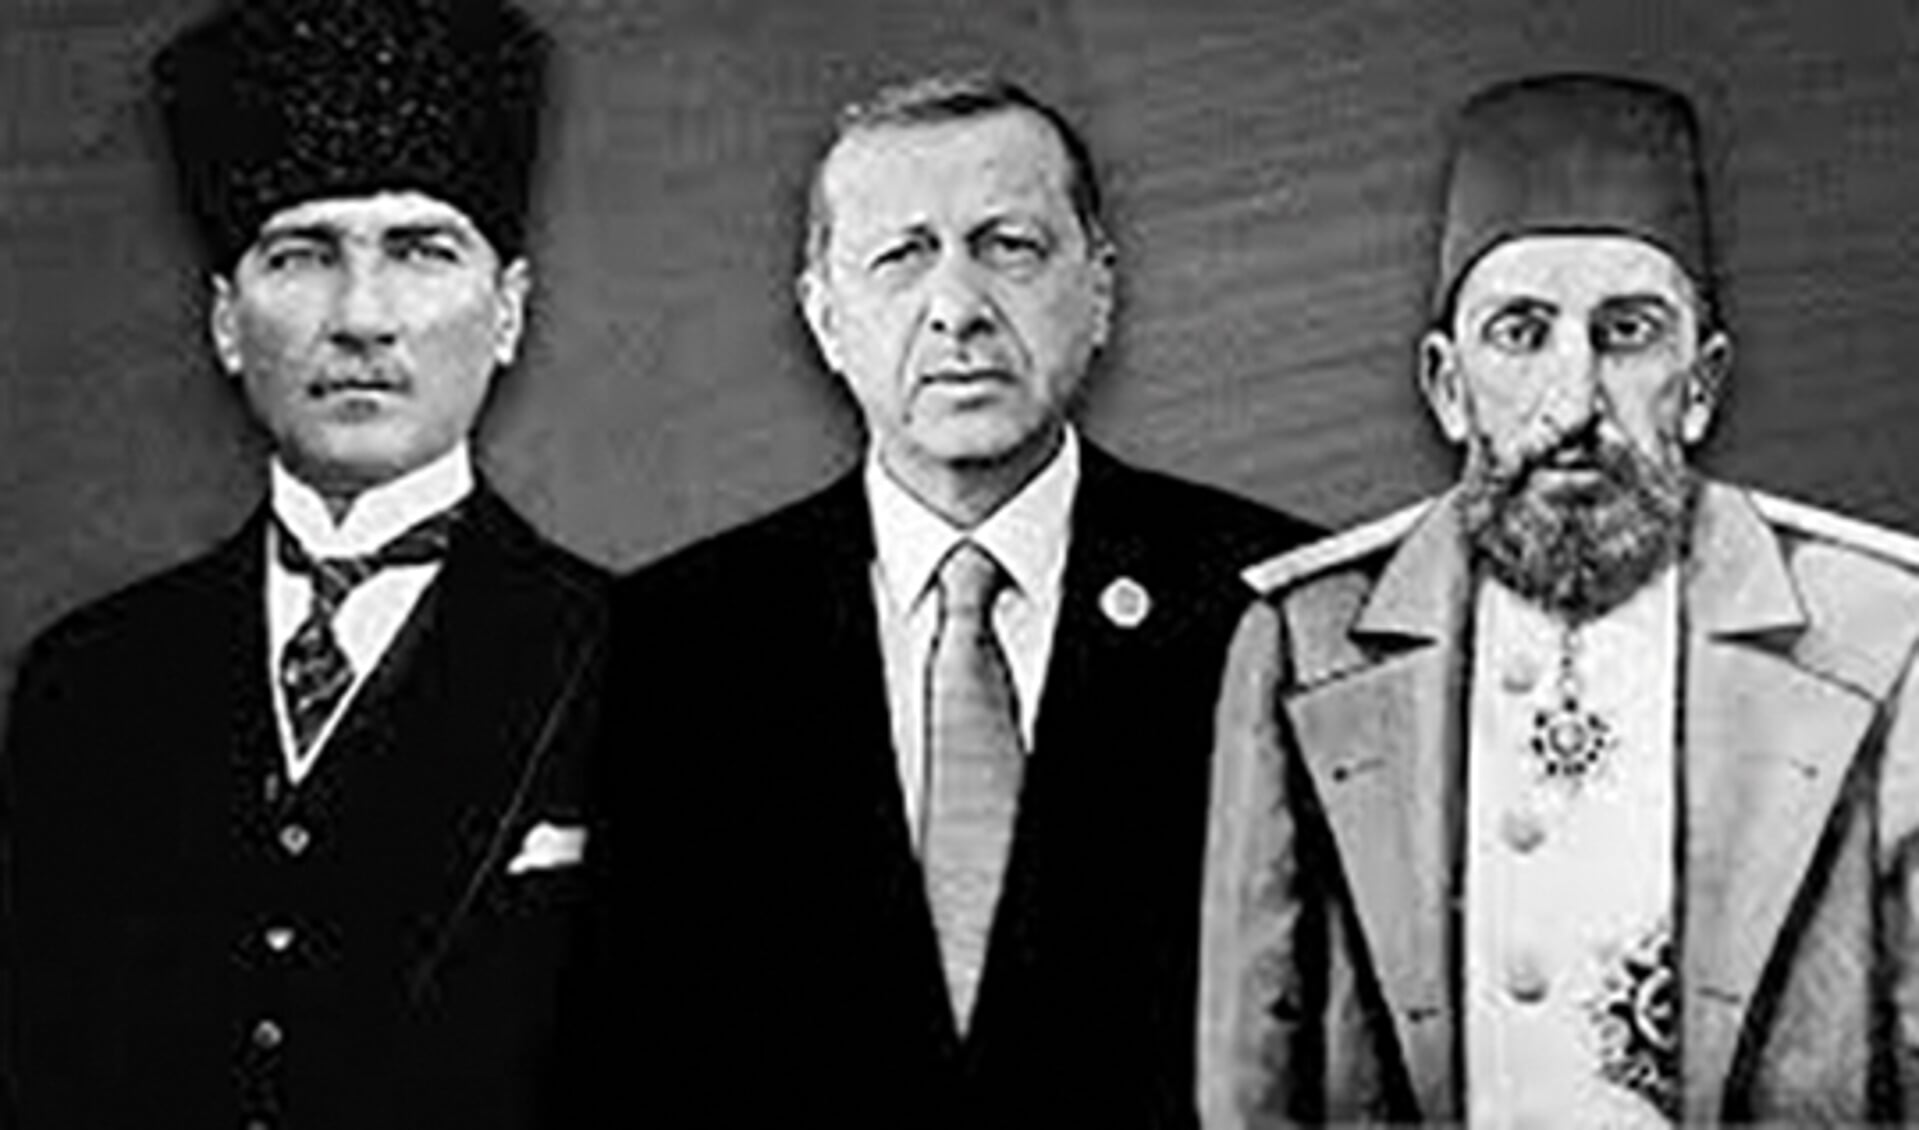 Mustafa Kemal Atatürk, Recep Tayyip Erdogan en een Turkse sultan.